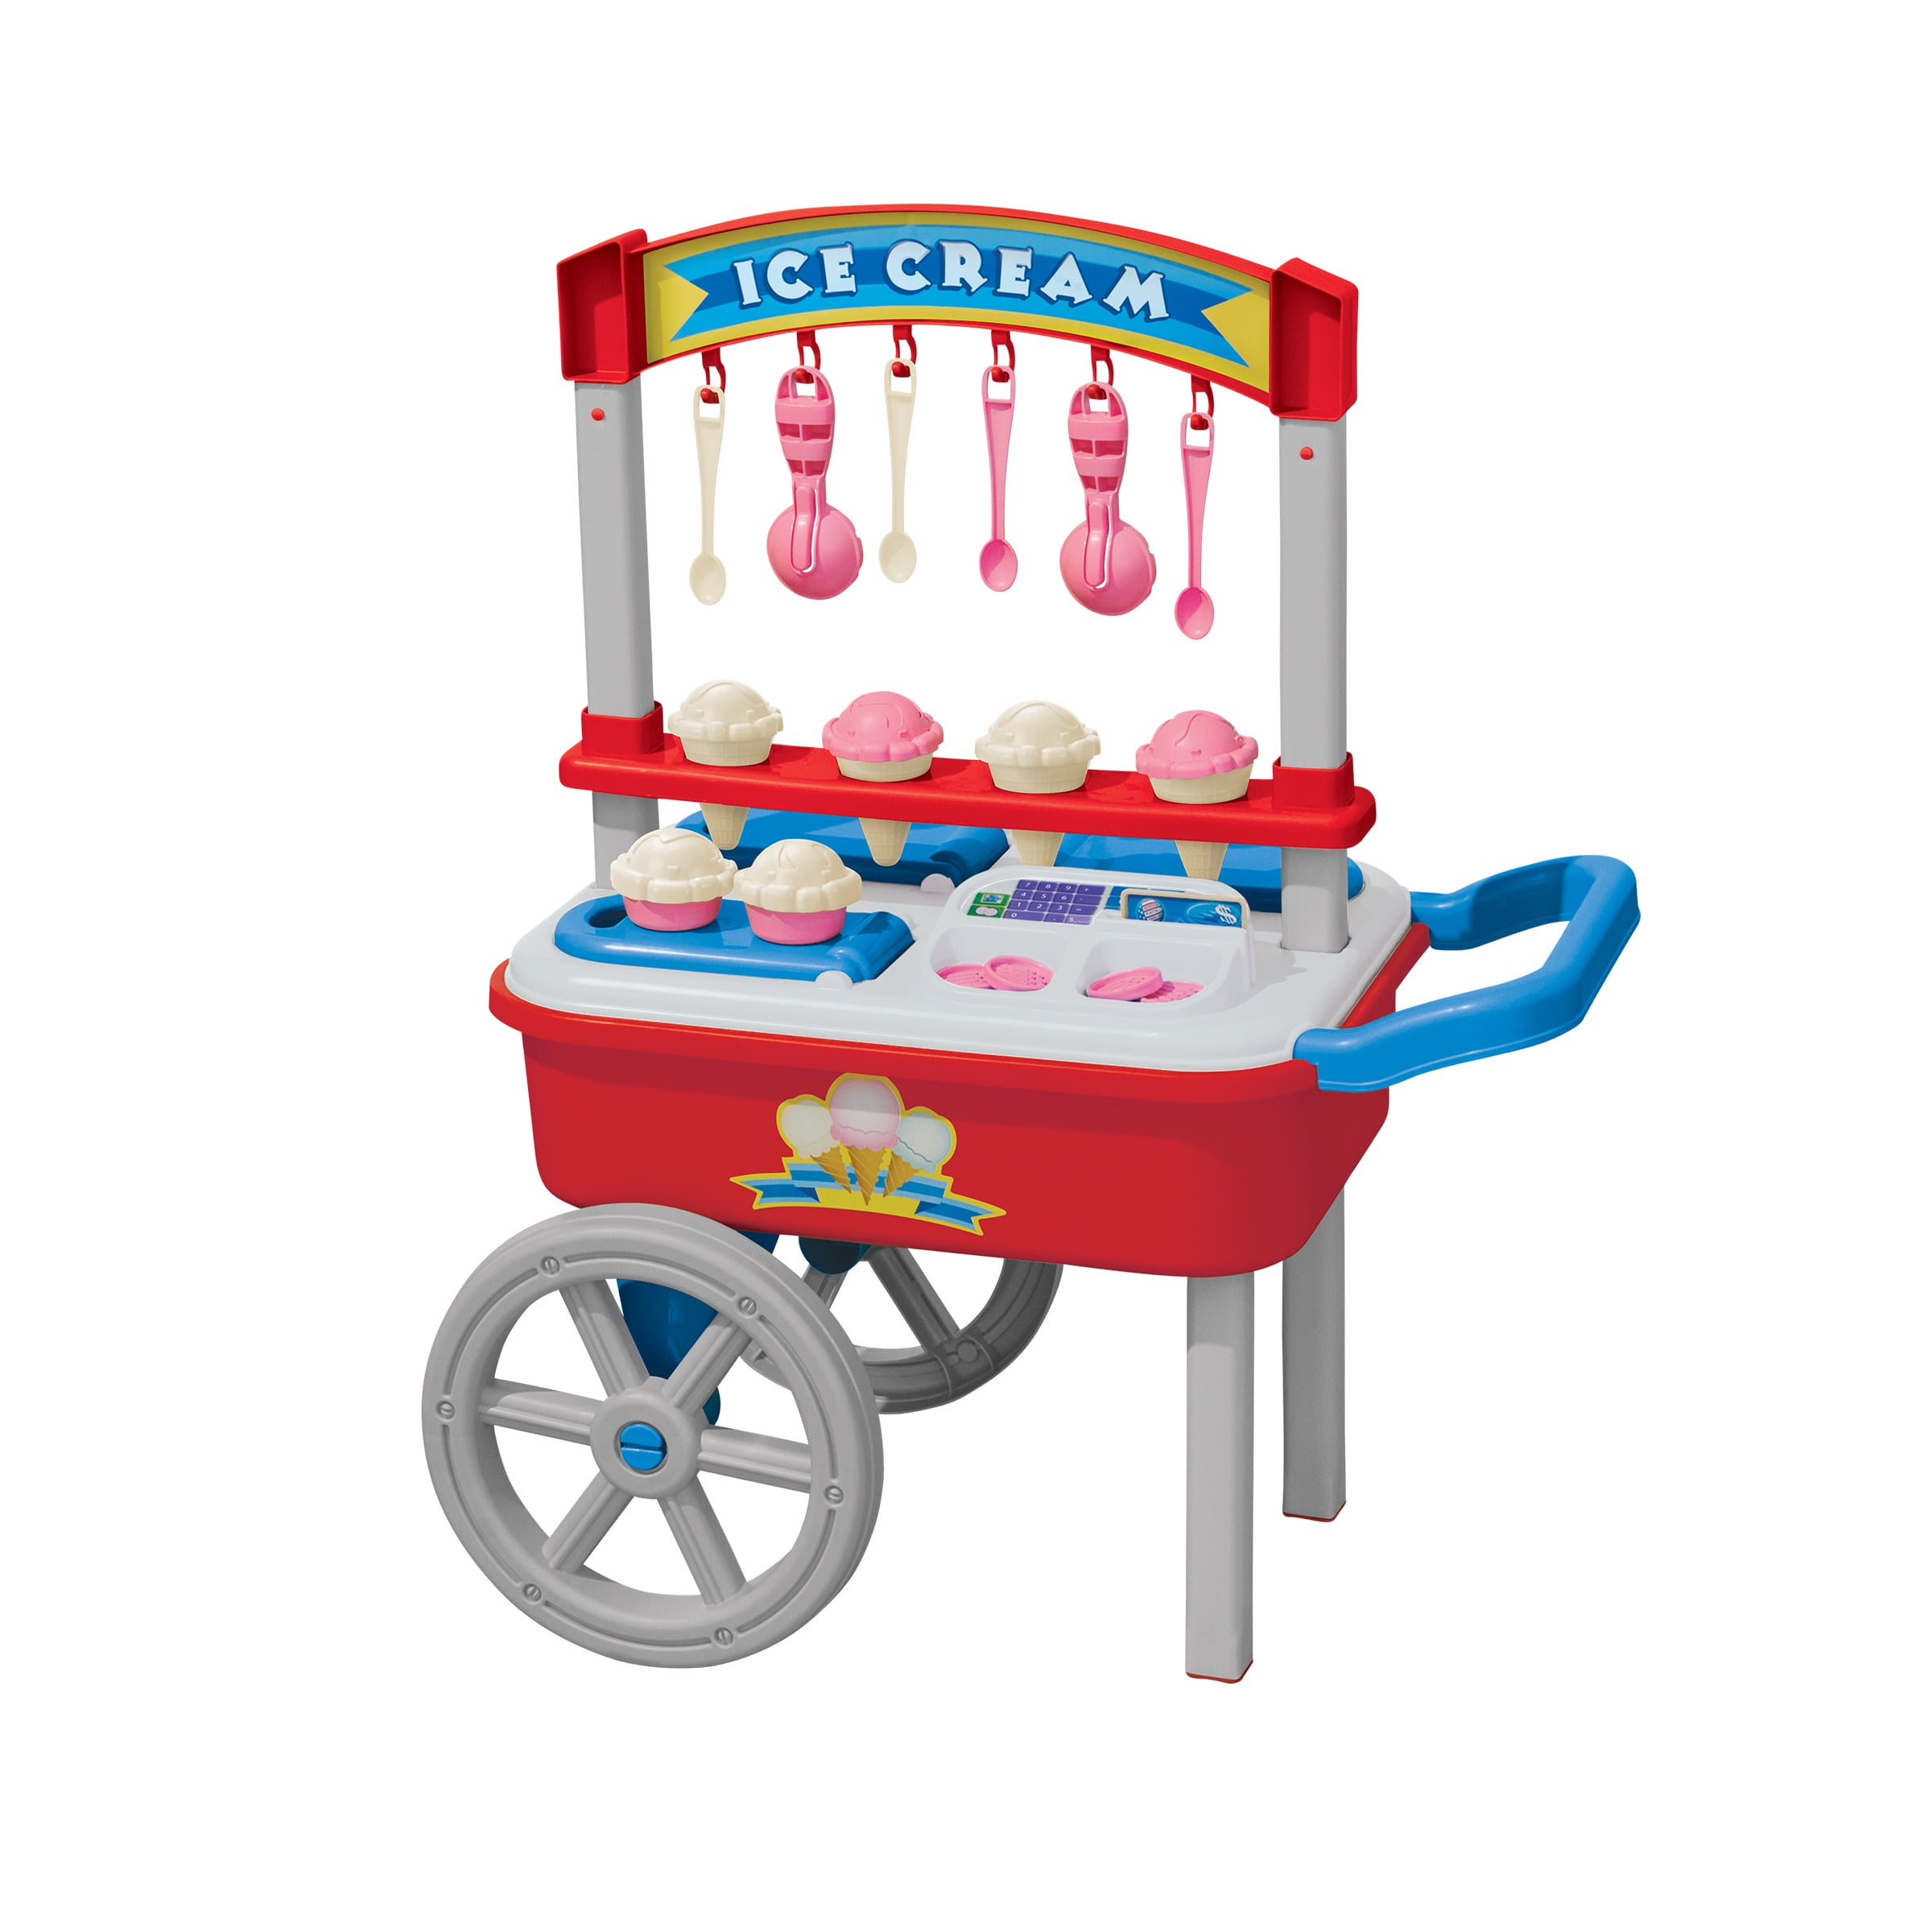 Chillfactor Ice Cream Maker Kids Toy Brand New